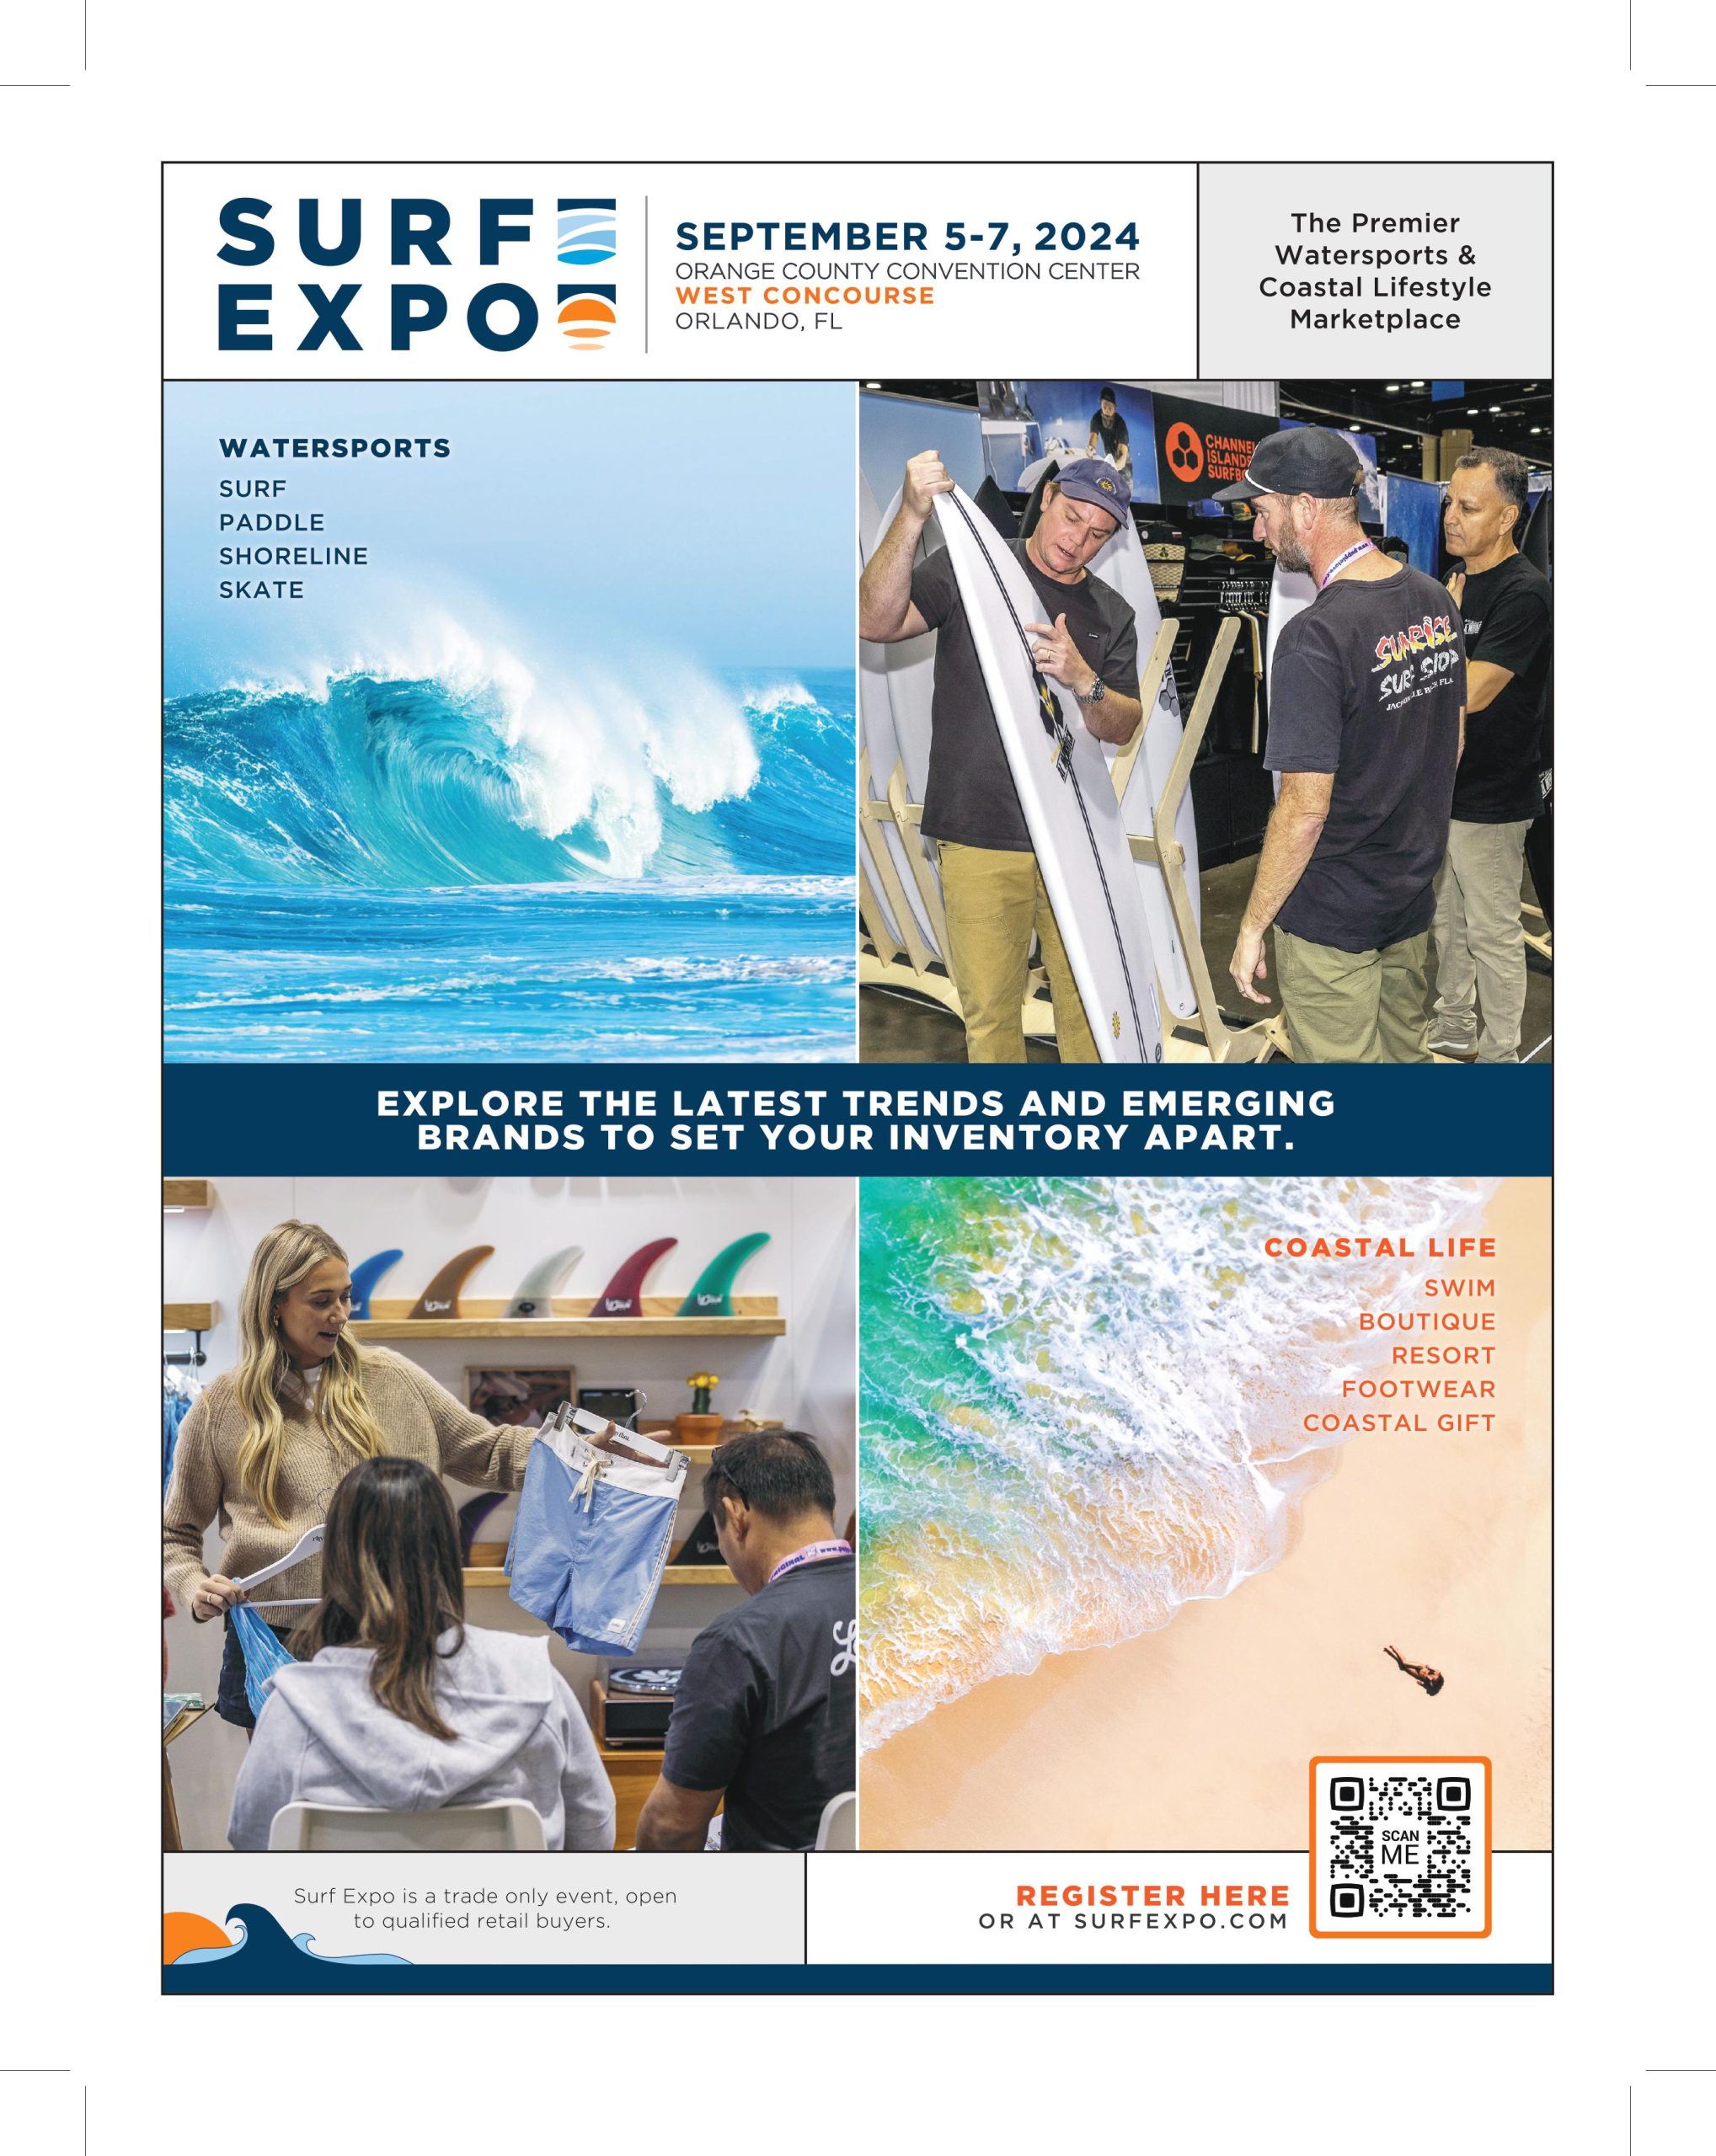 120 Surf Expo trade show